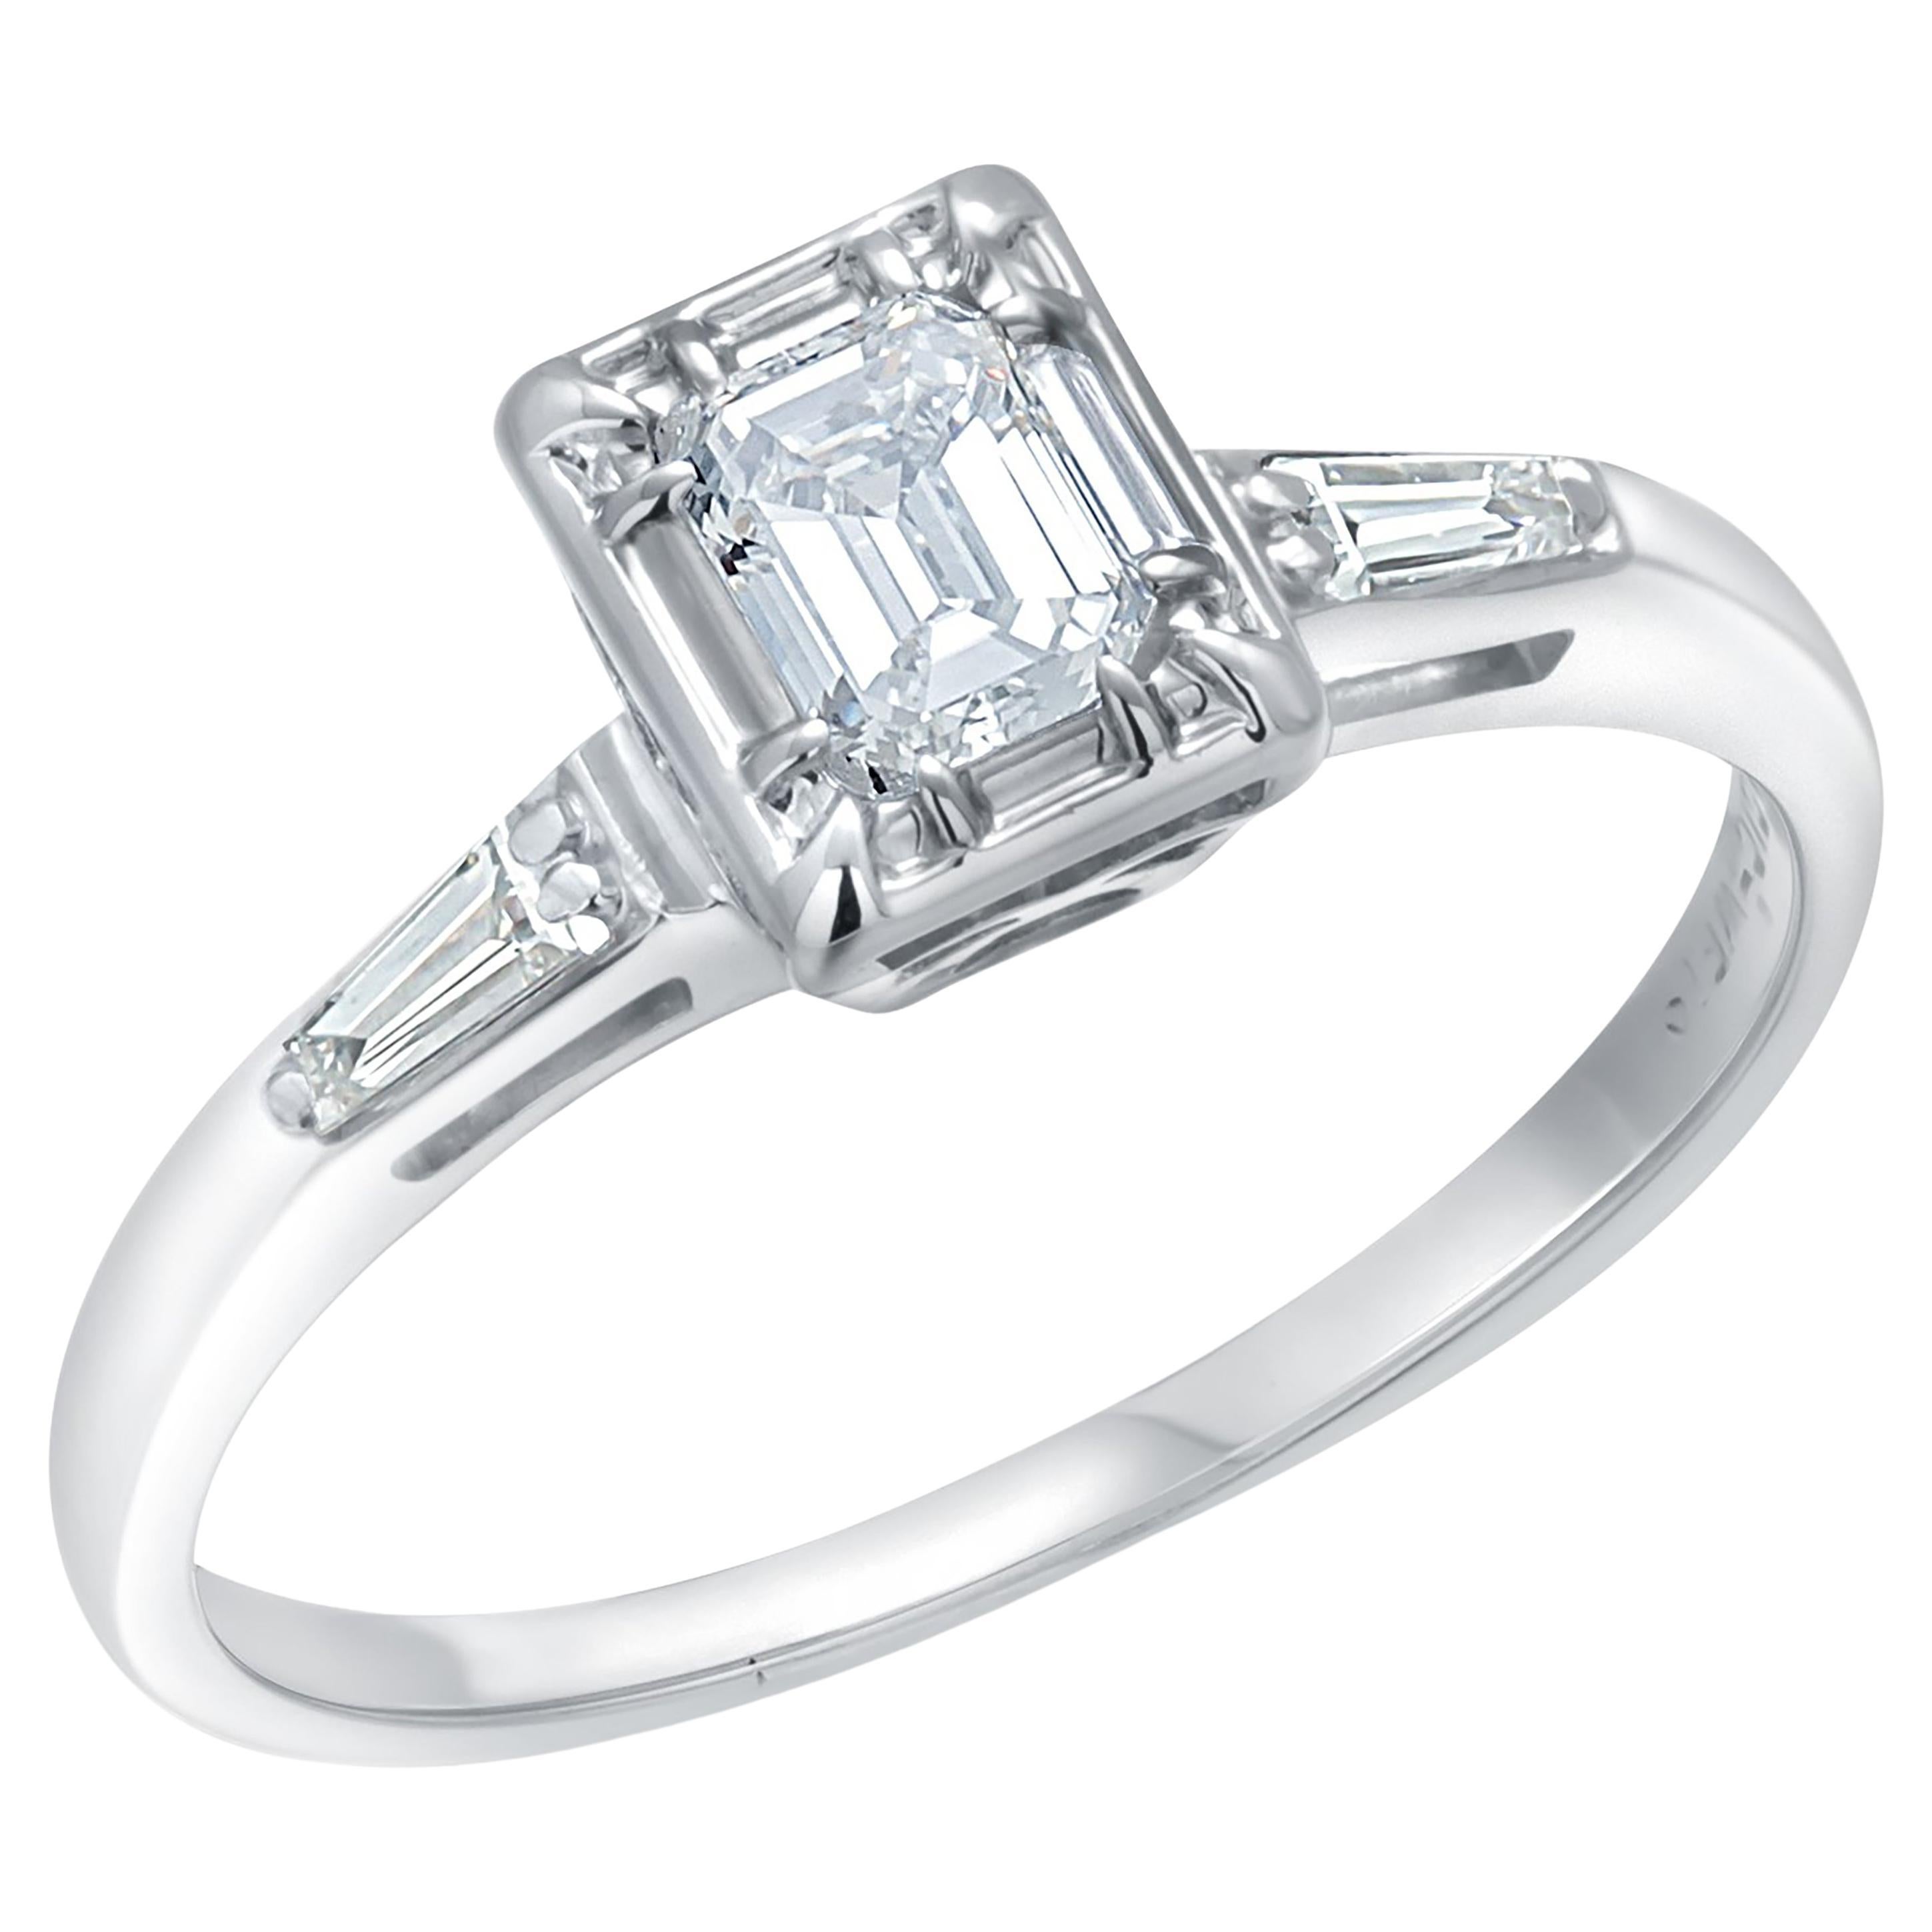  14k Gold Diamond Engagement Ring Emerald-Cut Center Diamond and Baguette Accent